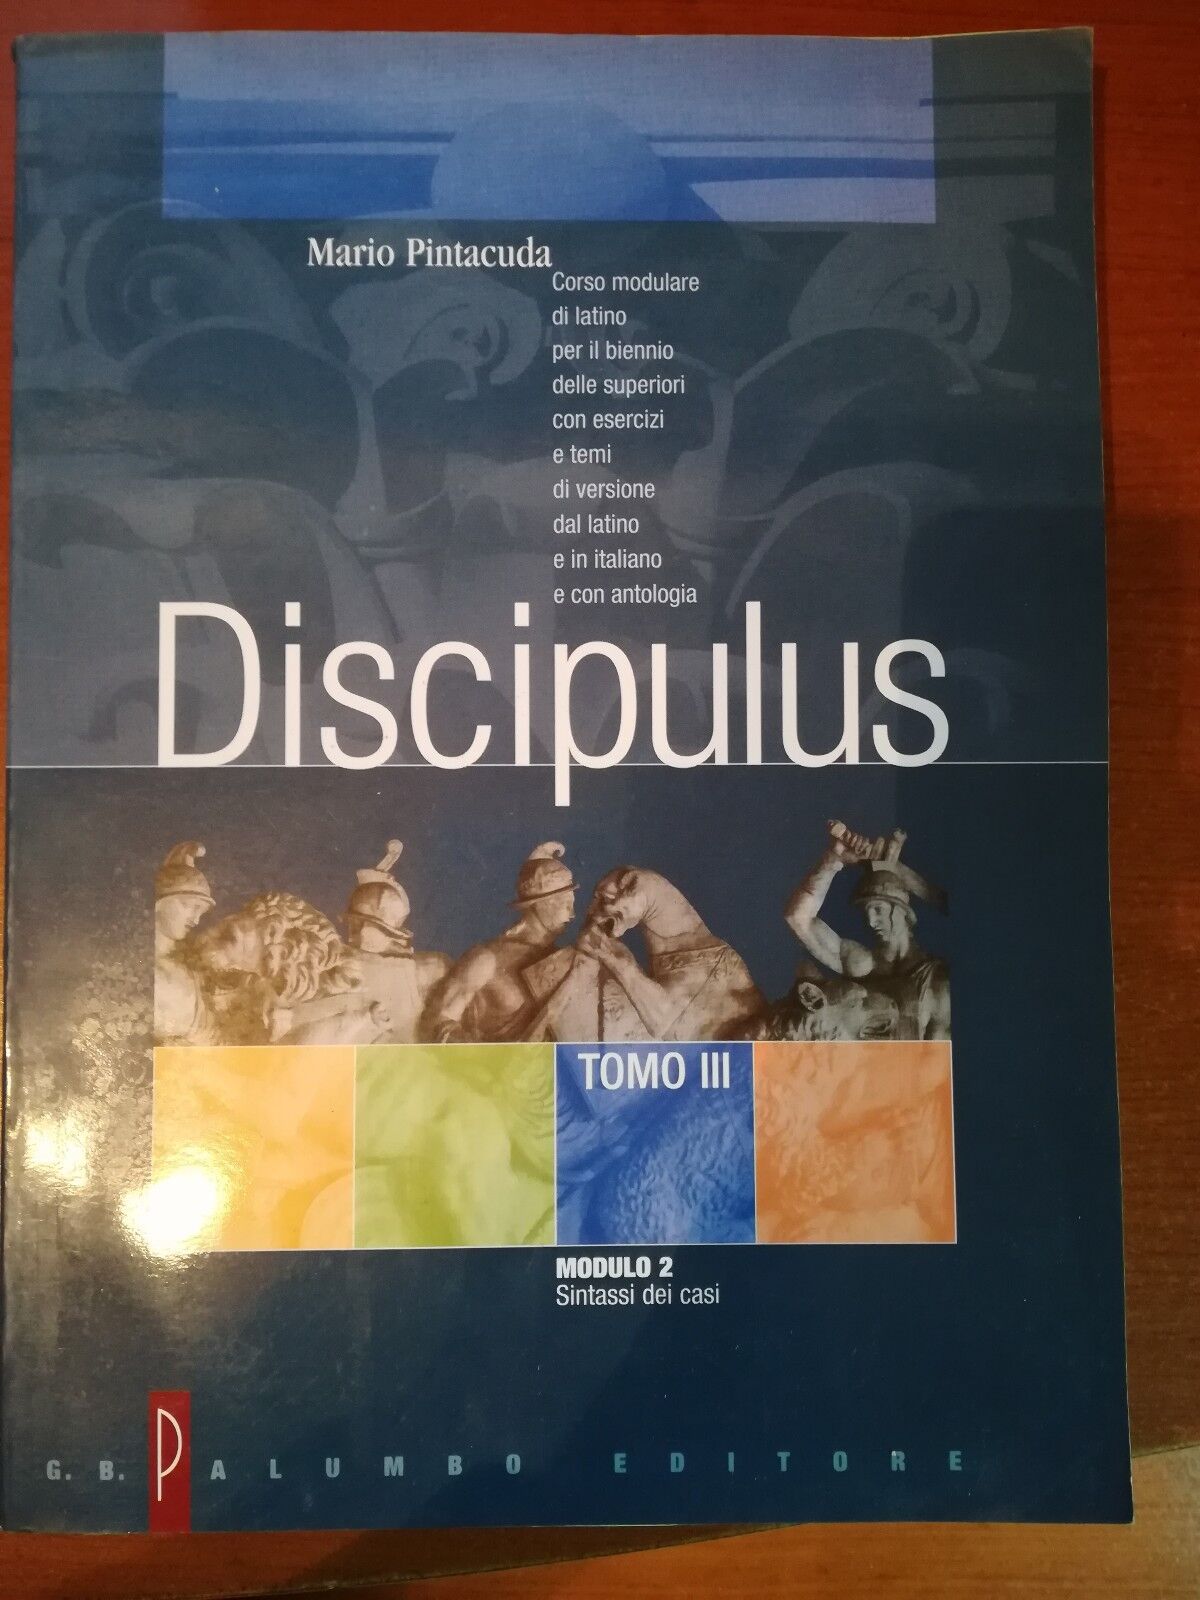 Discipulus Tomo III - Mario Pintacuda - Palumbo - 2002 - M libro usato